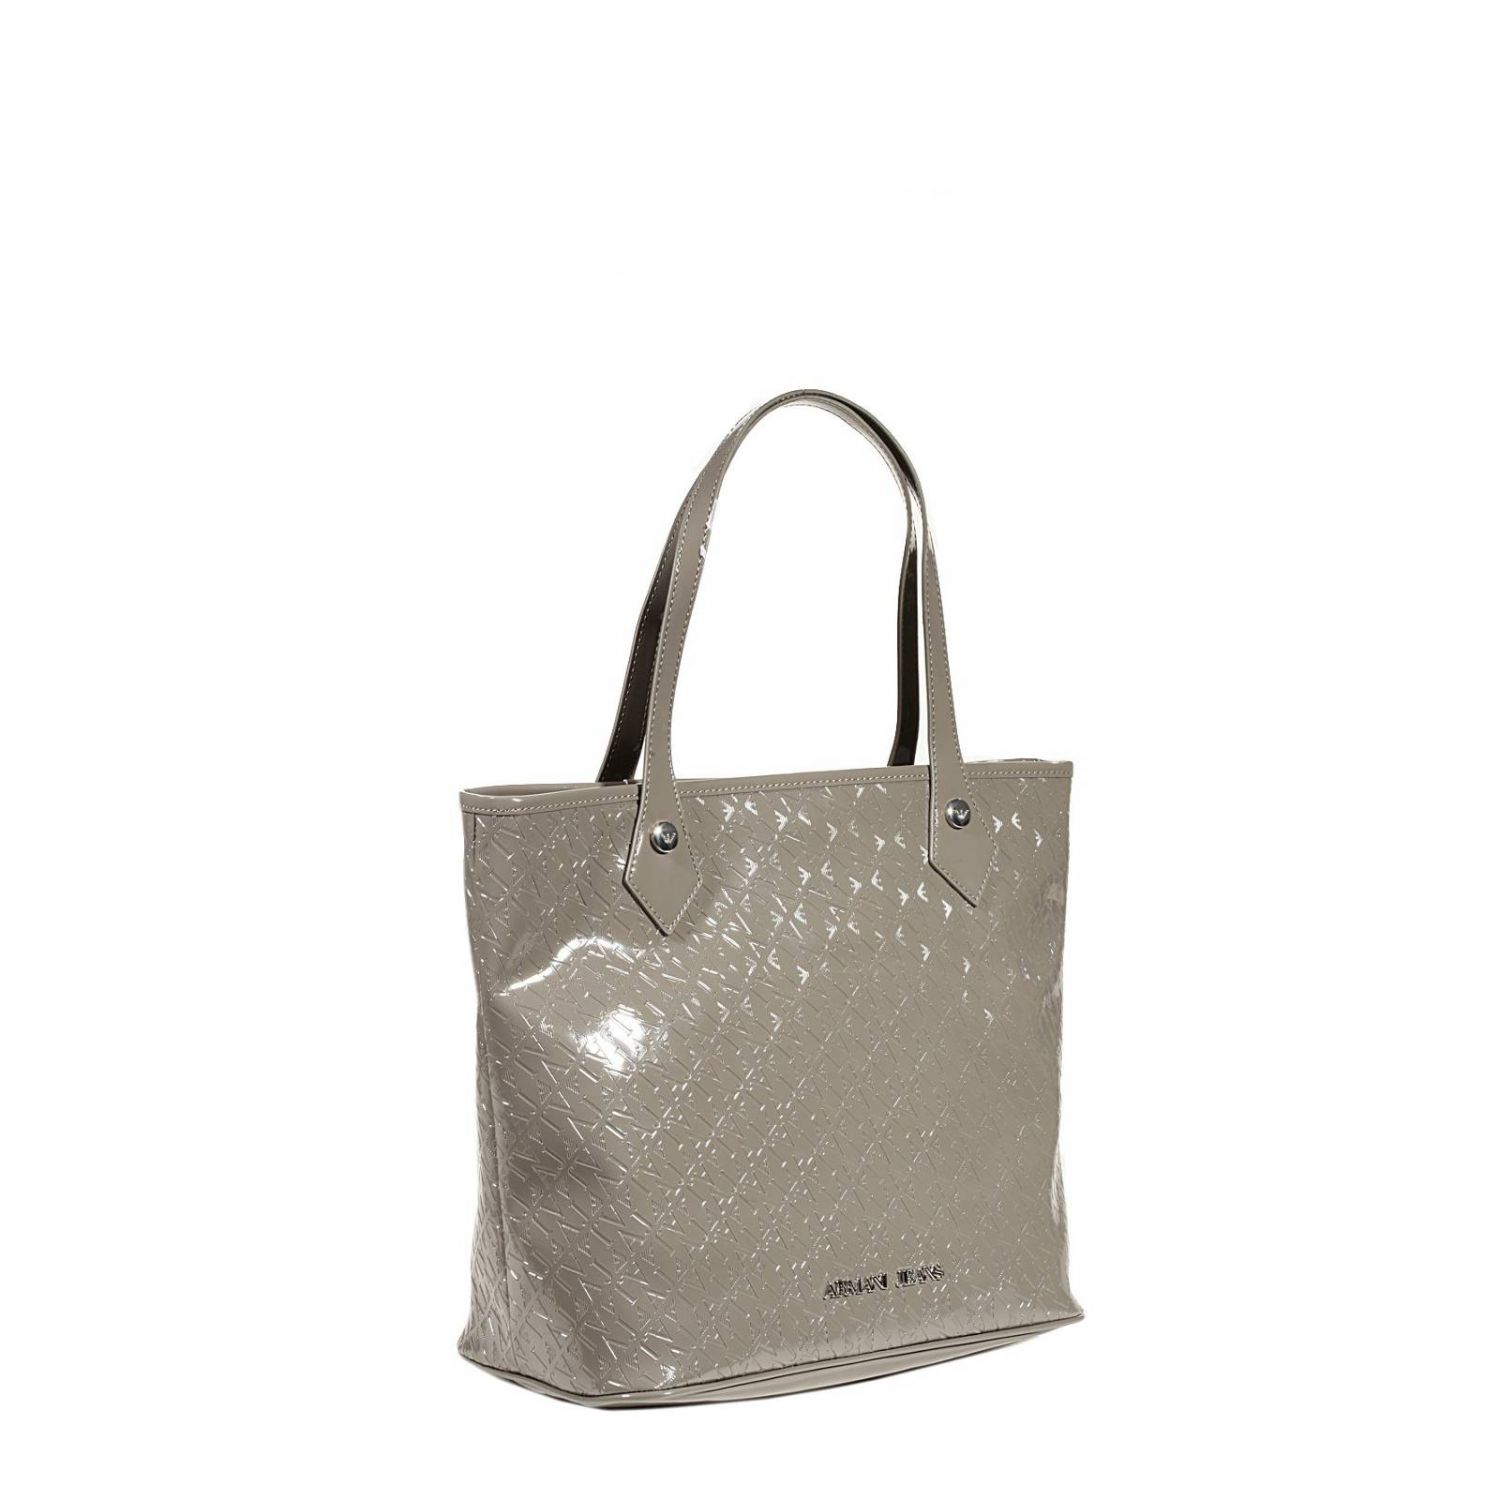 Armani Jeans Handbag Patent Leather Branded Medium Shopping Bag in Gray ...